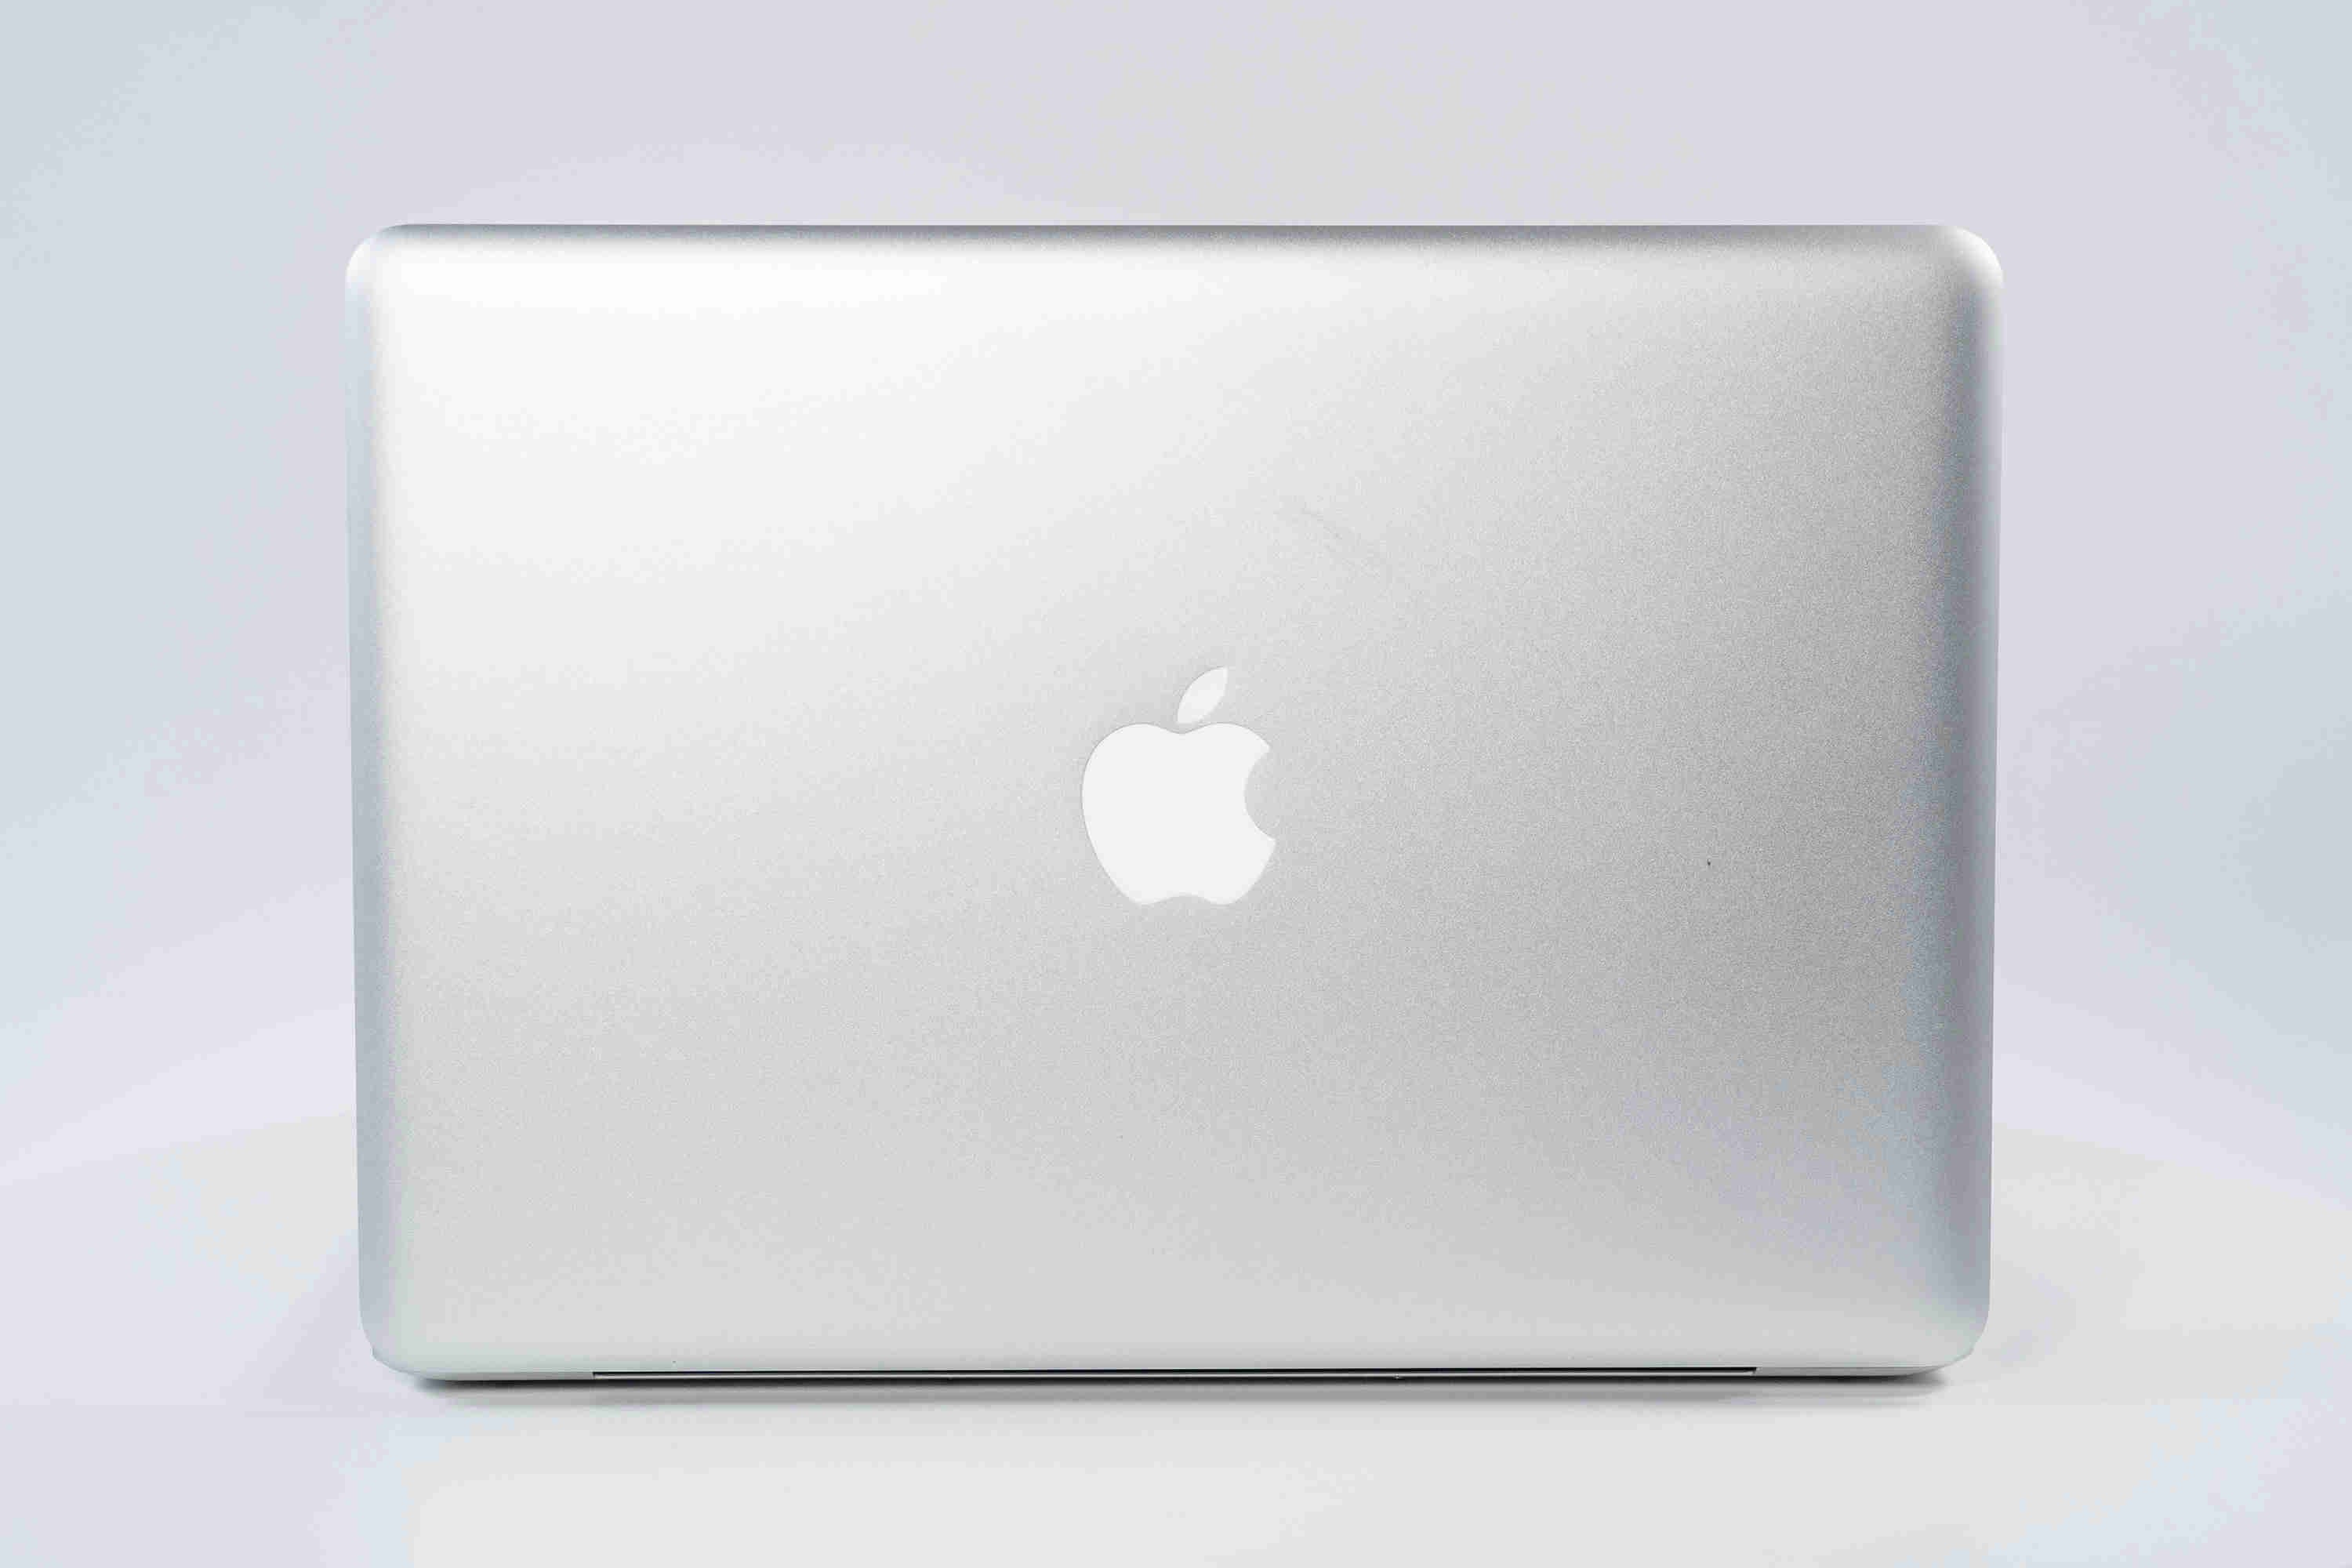  Apple MacBook Air MJVE2LL/A Intel Core i5-5250U X2 1.6GHz 8GB  128GB, Silver (Renewed) : Electronics